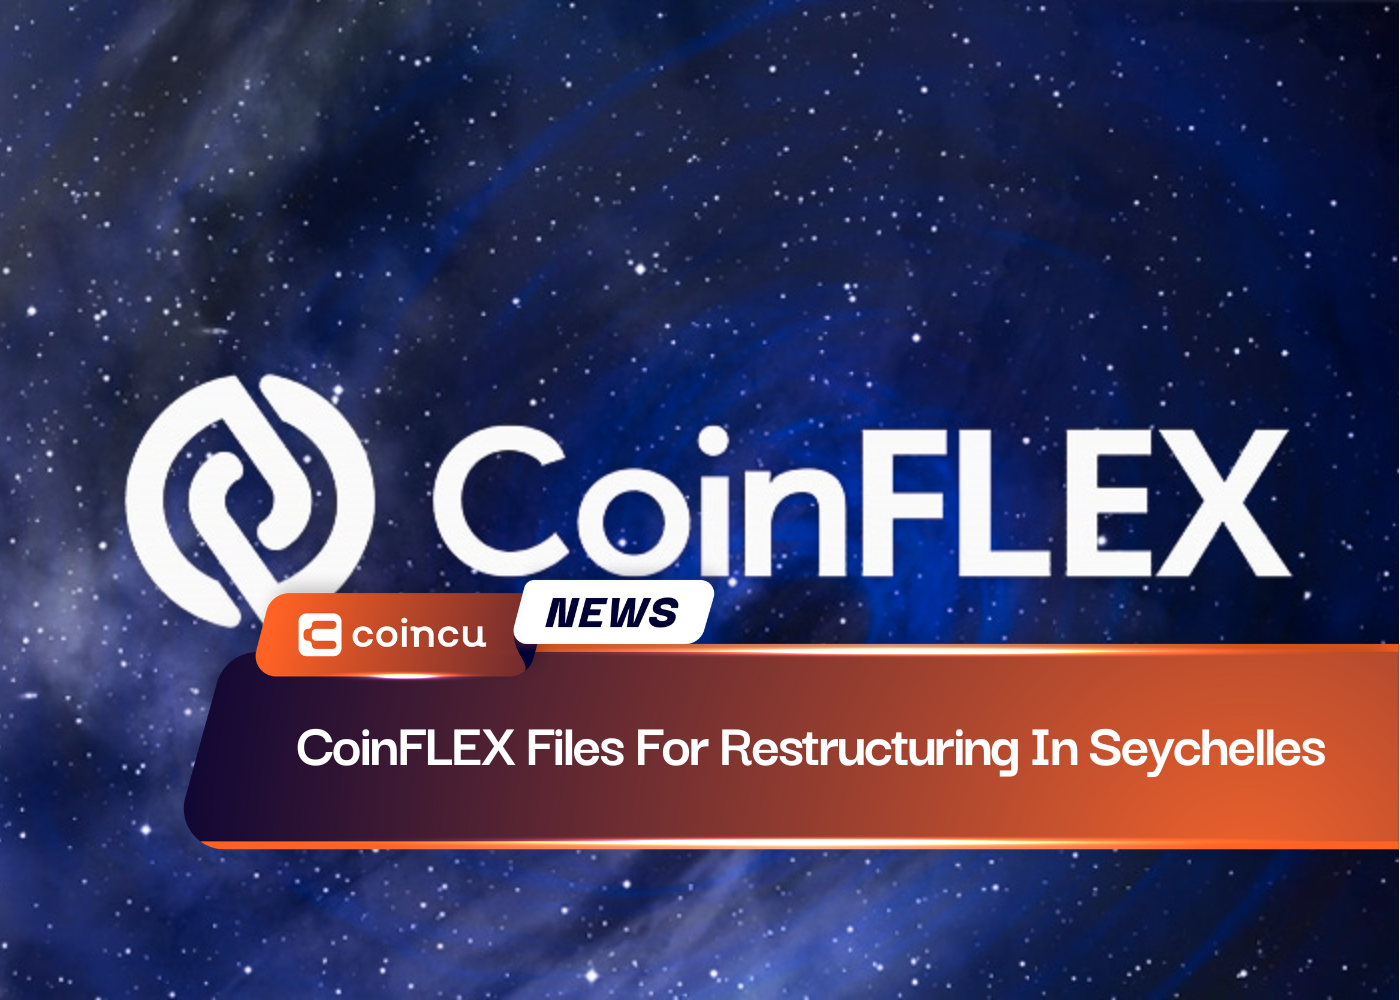 Archivos CoinFLEX para reestructuración en Seychelles